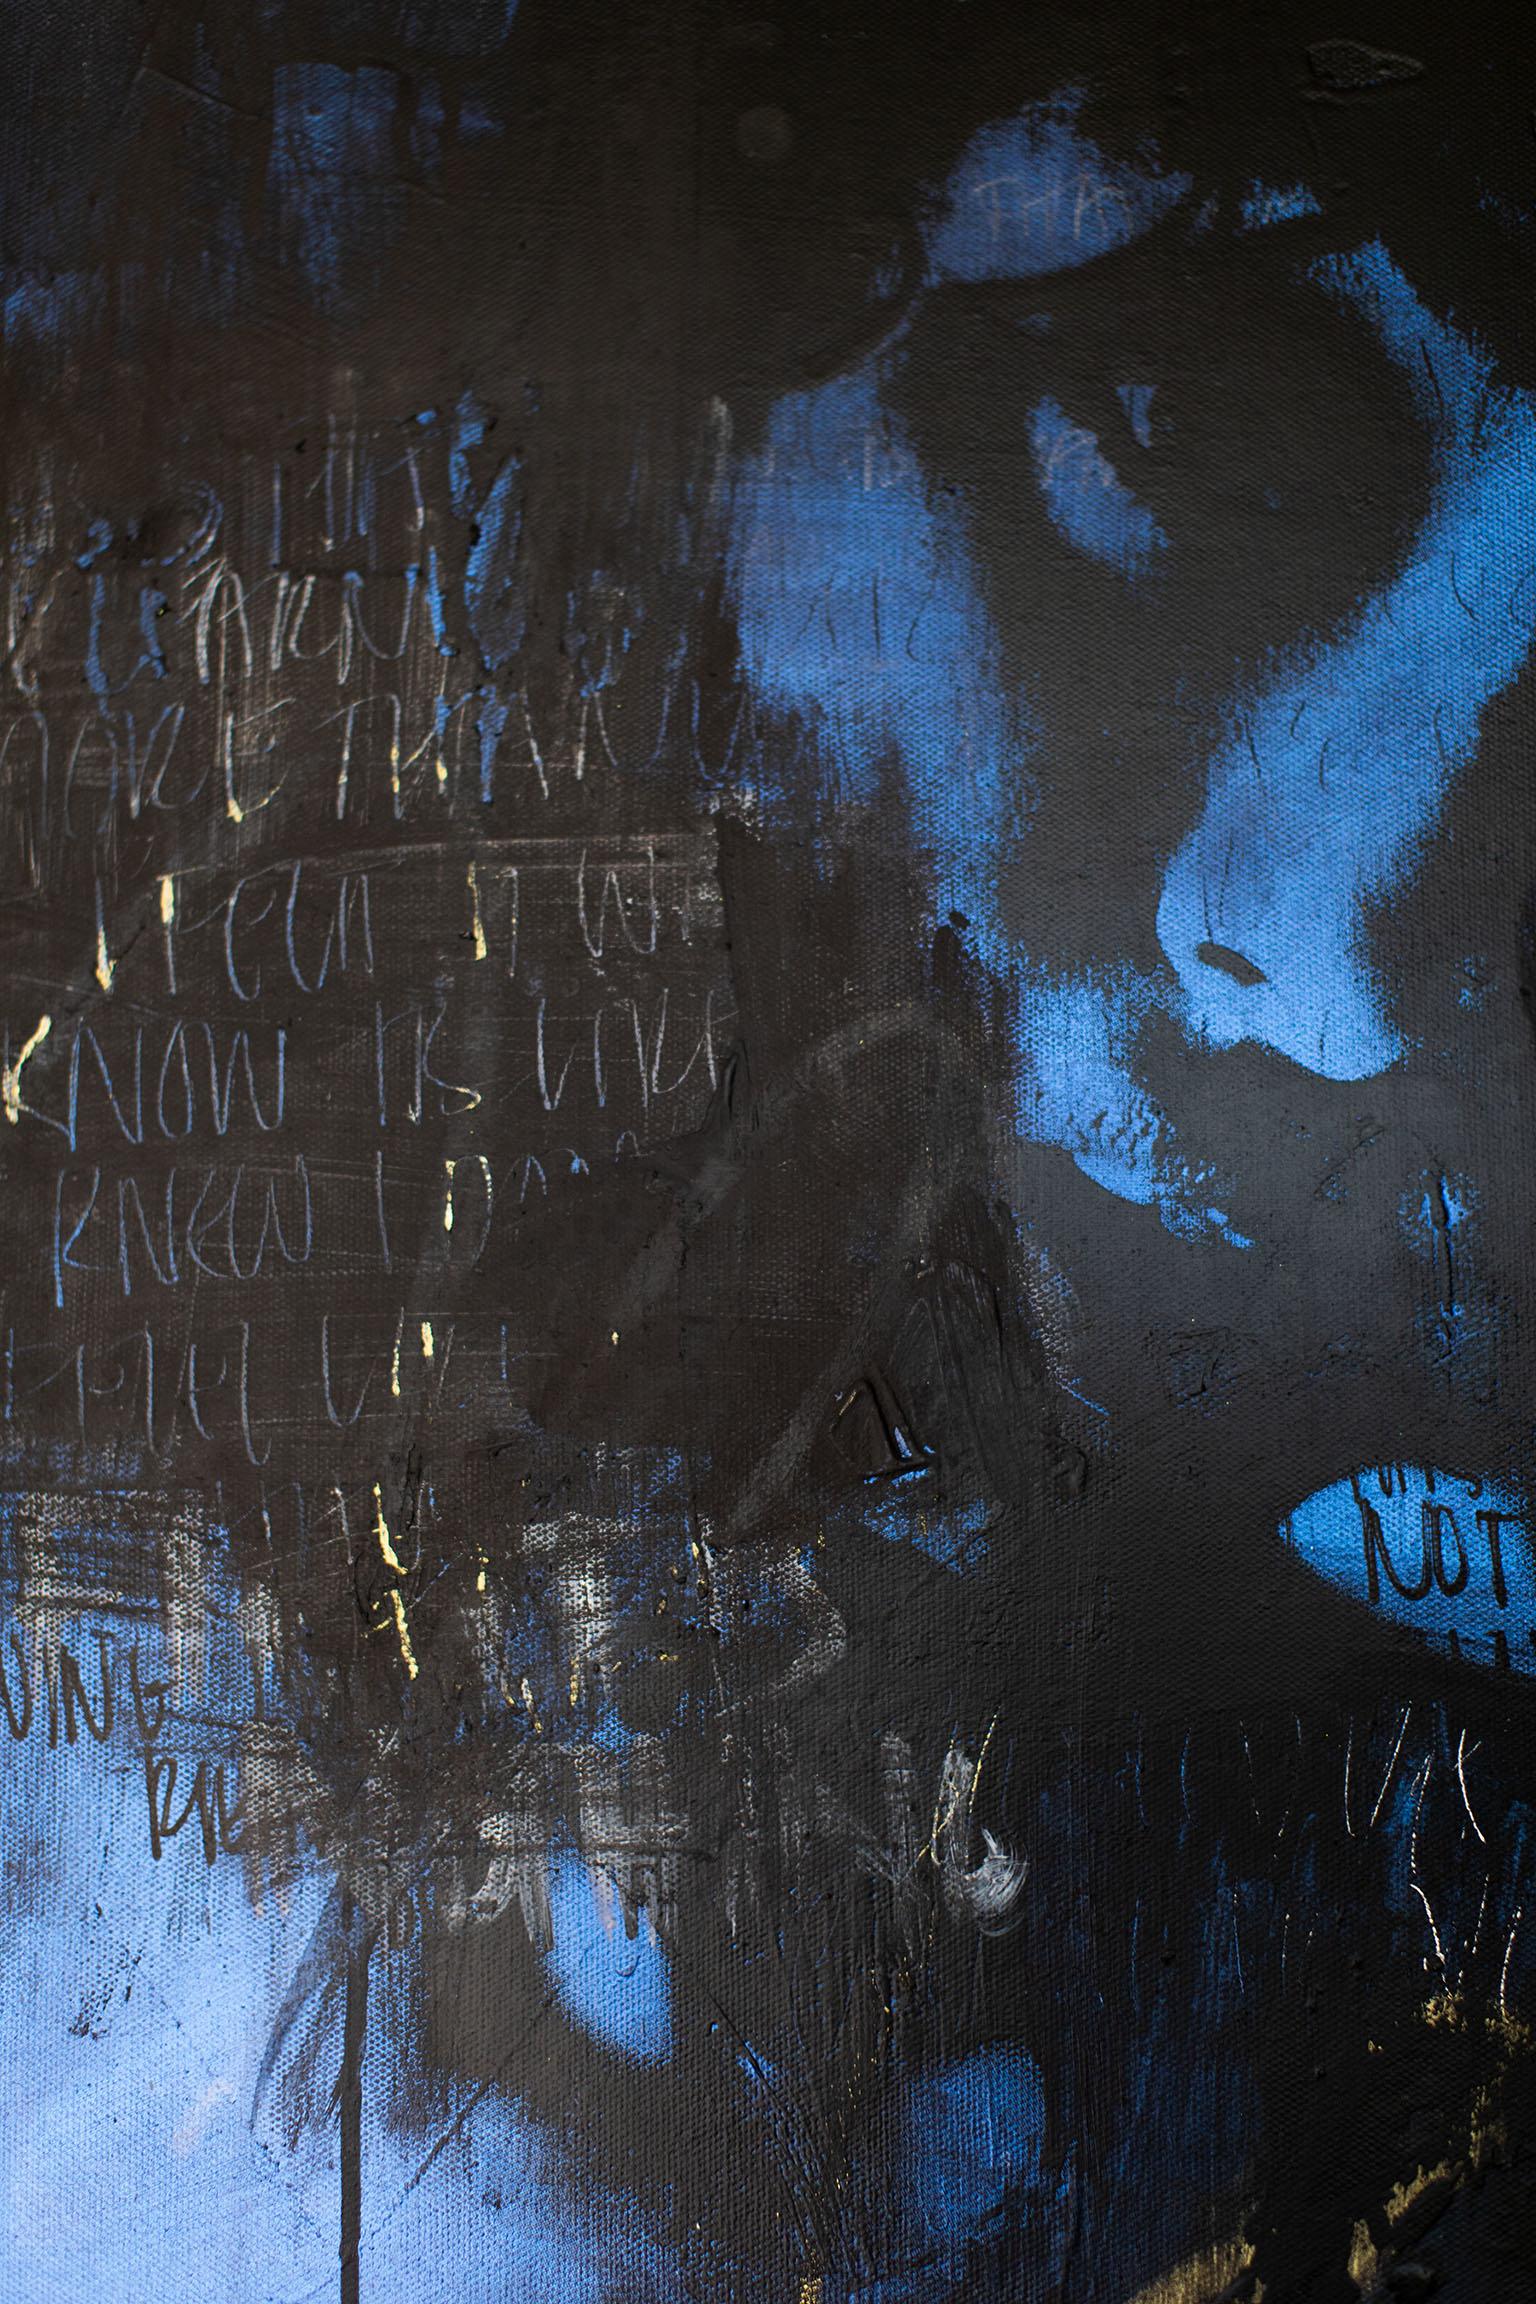 Street Art, Schwarz-Blau-Malerei, Porträtmalerei - Ein Gesicht zwischen den Wörtern

A B O U T H I E S P I E K E : 
